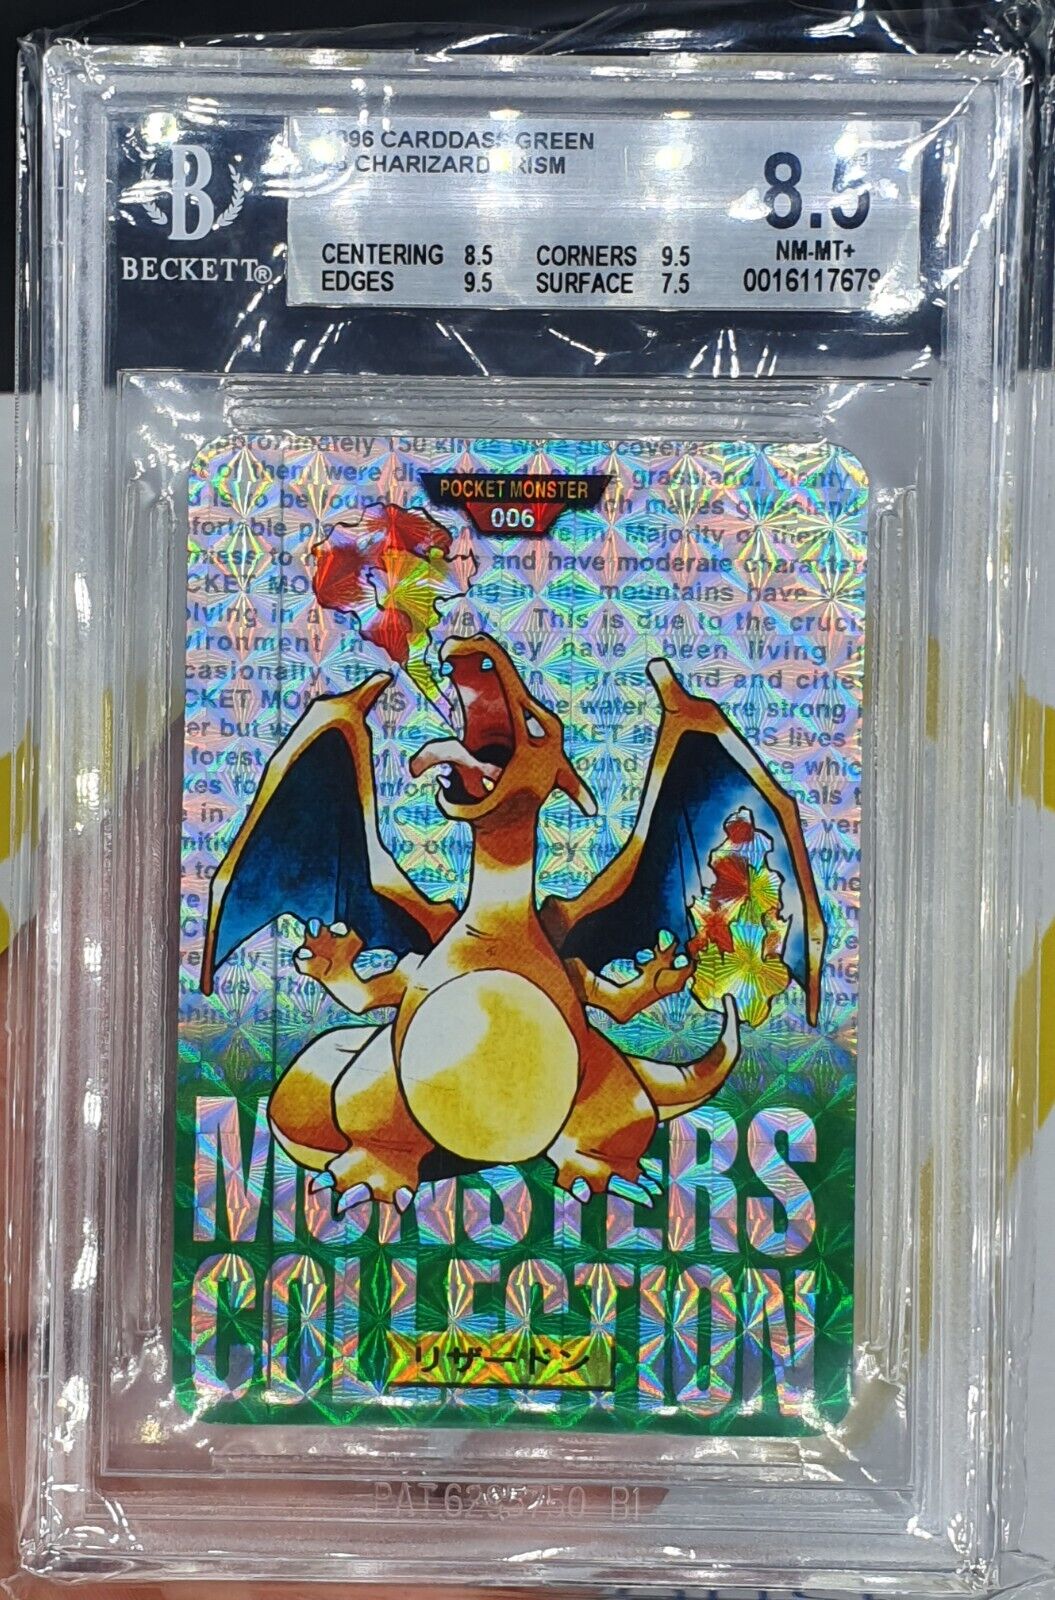 BGS 85 NM MINT Charizard Carddass Bandai PRISM Japanese 1996 Pokemon PSA